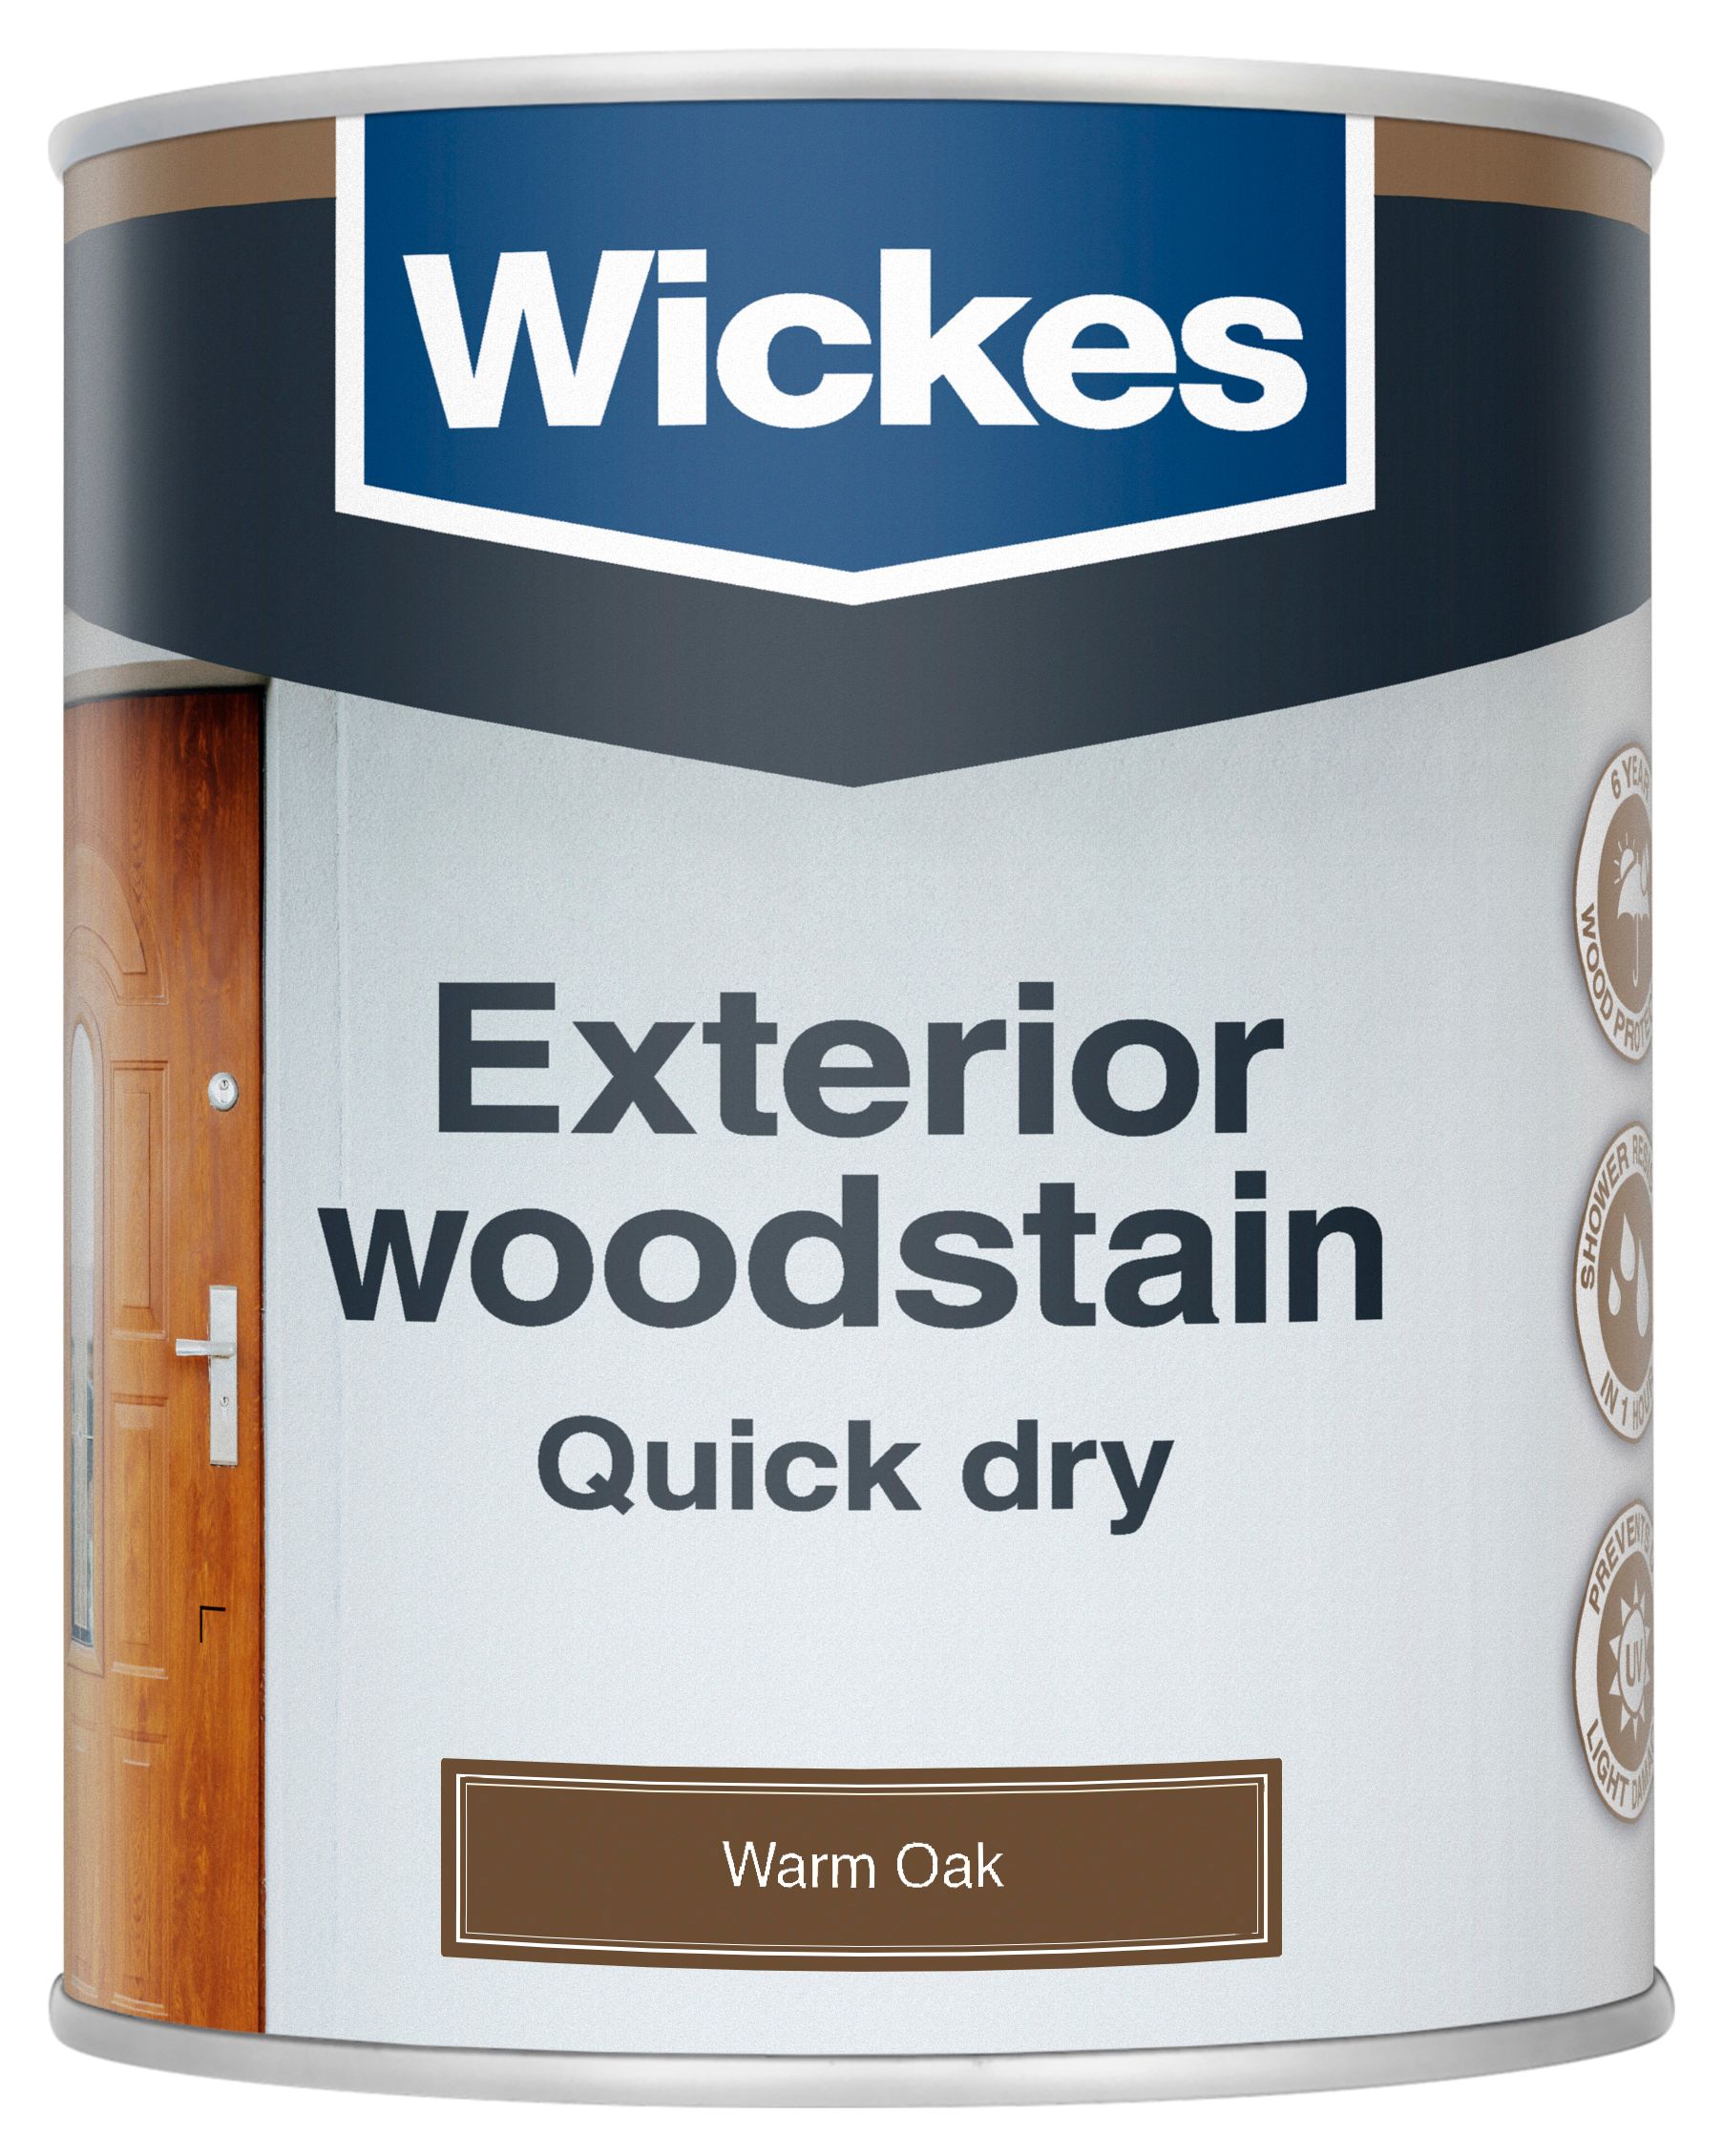 Wickes Exterior Quick Dry Woodstain - Warm Oak - 750ml